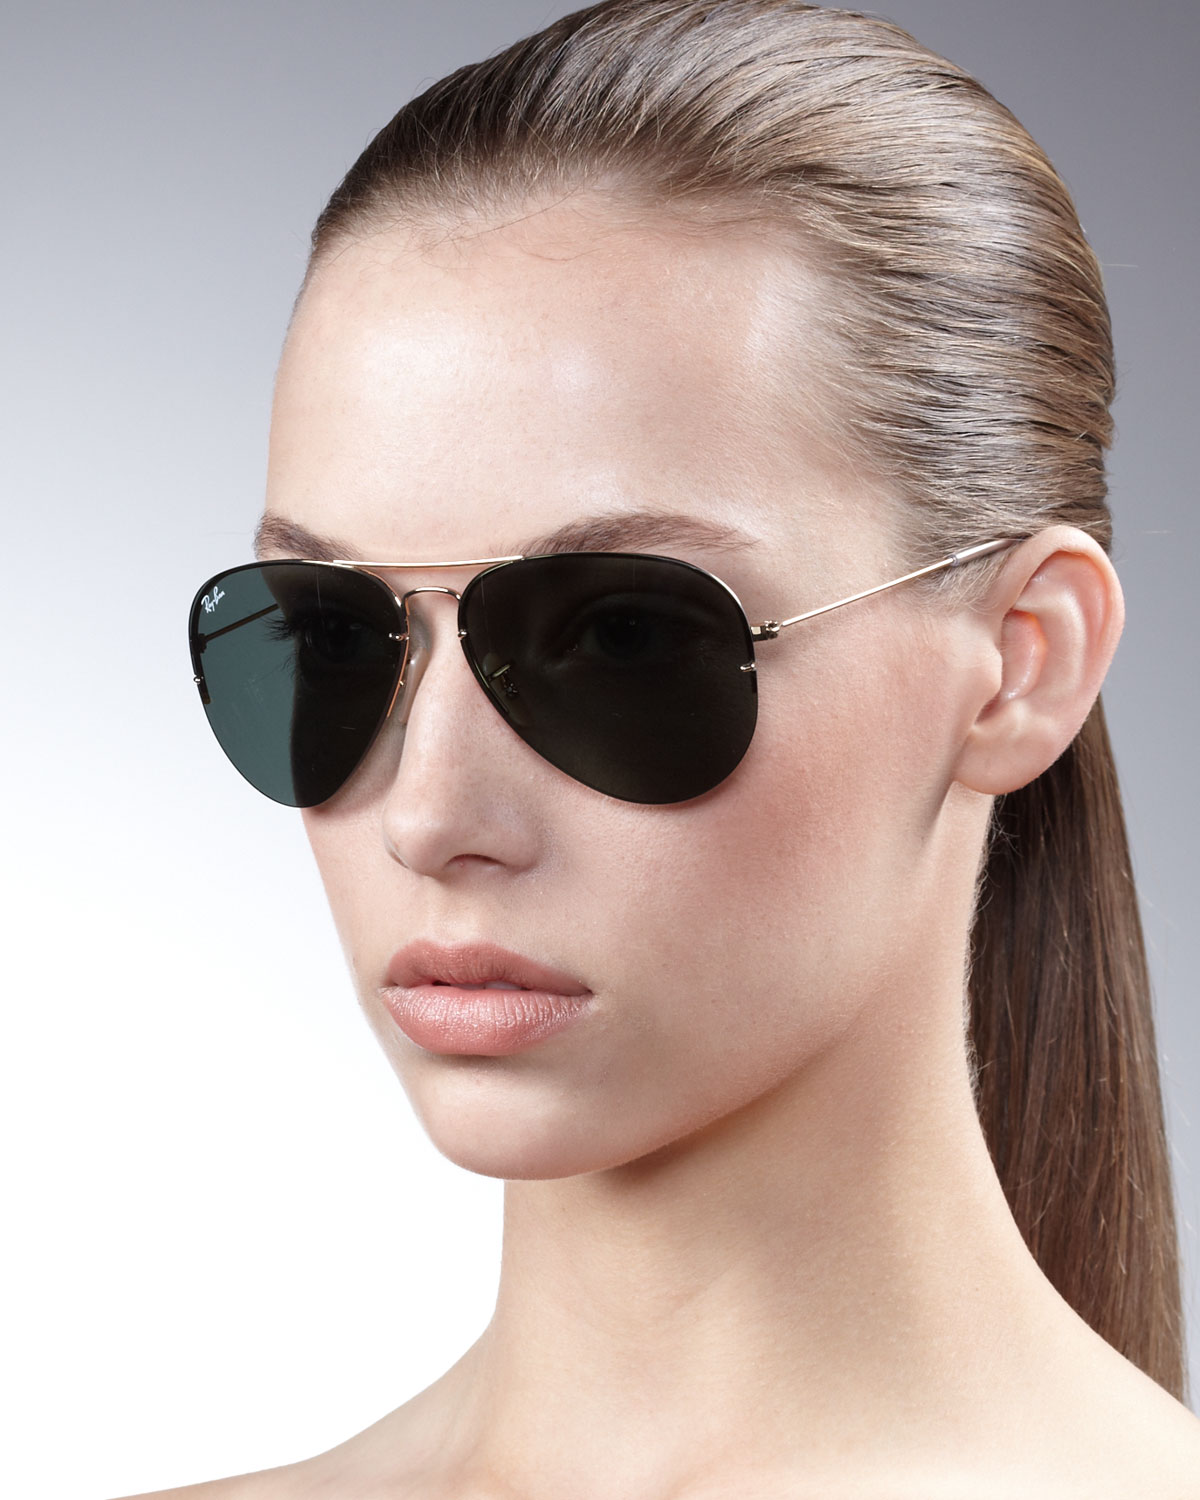 Lyst - Ray-Ban Light Ray Aviator Sunglasses in Black